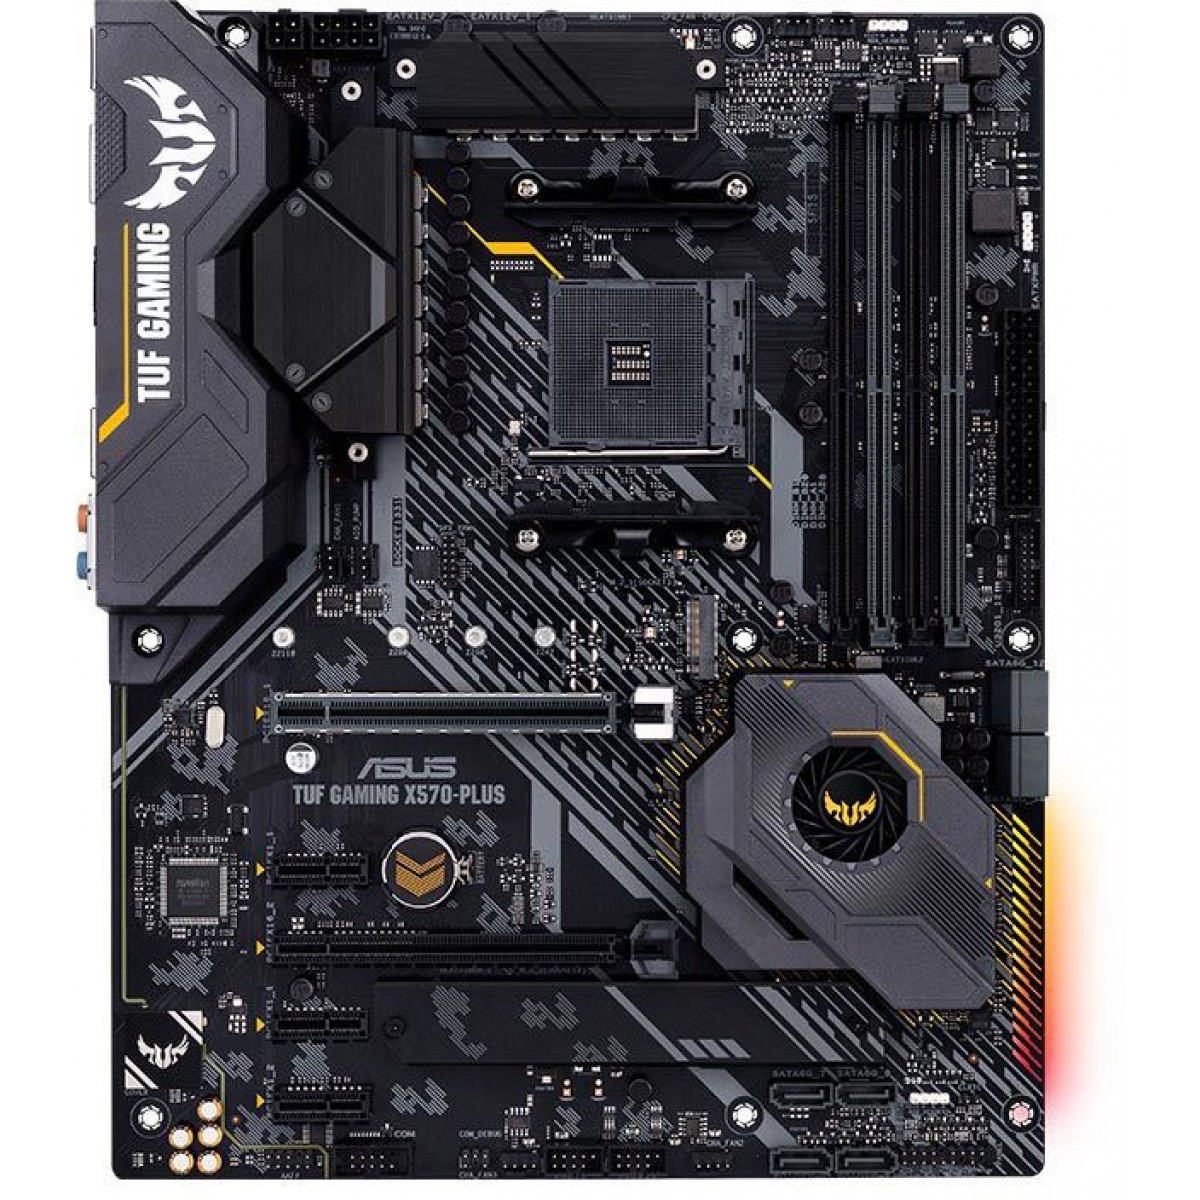  Kit Upgrade, ASUS TUF Gaming X570-Plus + AMD Ryzen 5 5600G + Memória DDR4, 16GB 3000MHz